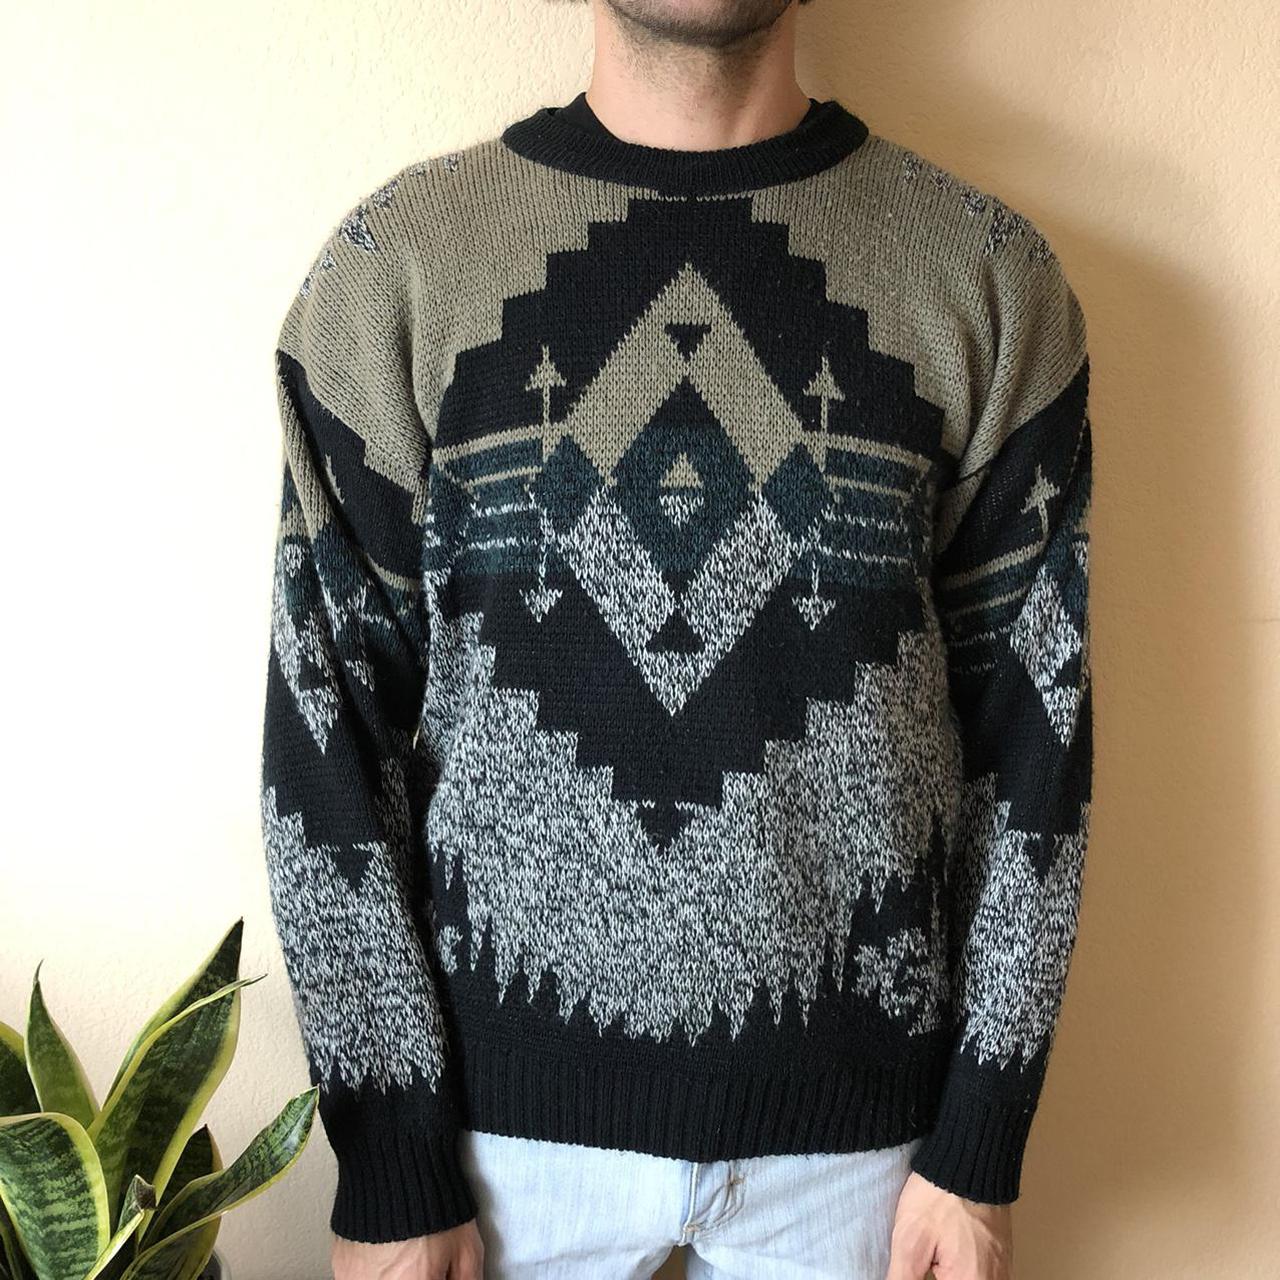 David Taylor sweater. Really cool southwestern,... - Depop